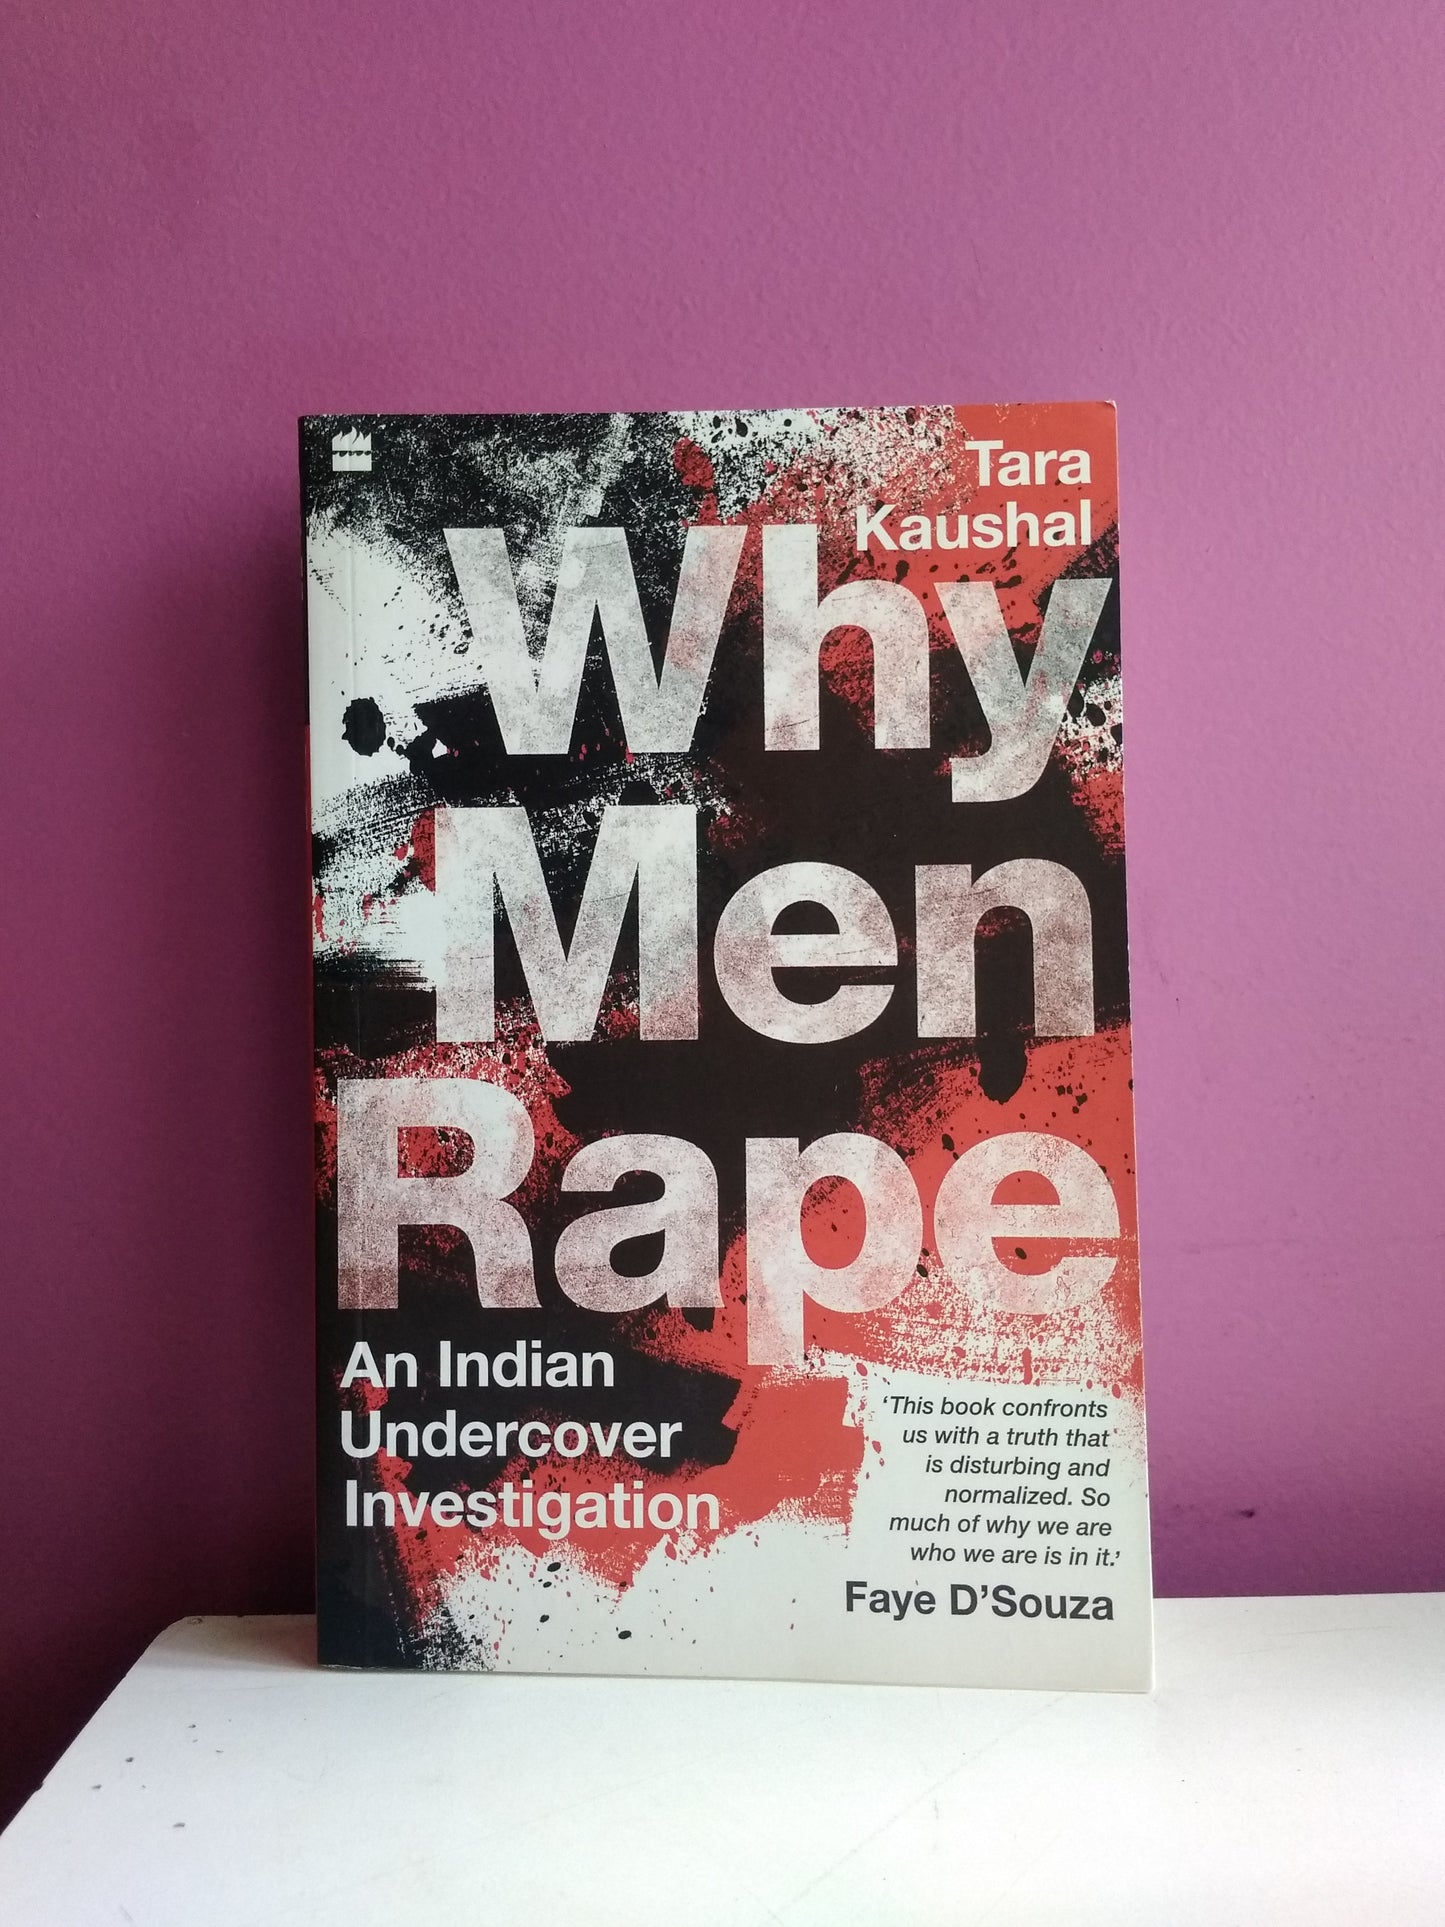 Why Men Rape